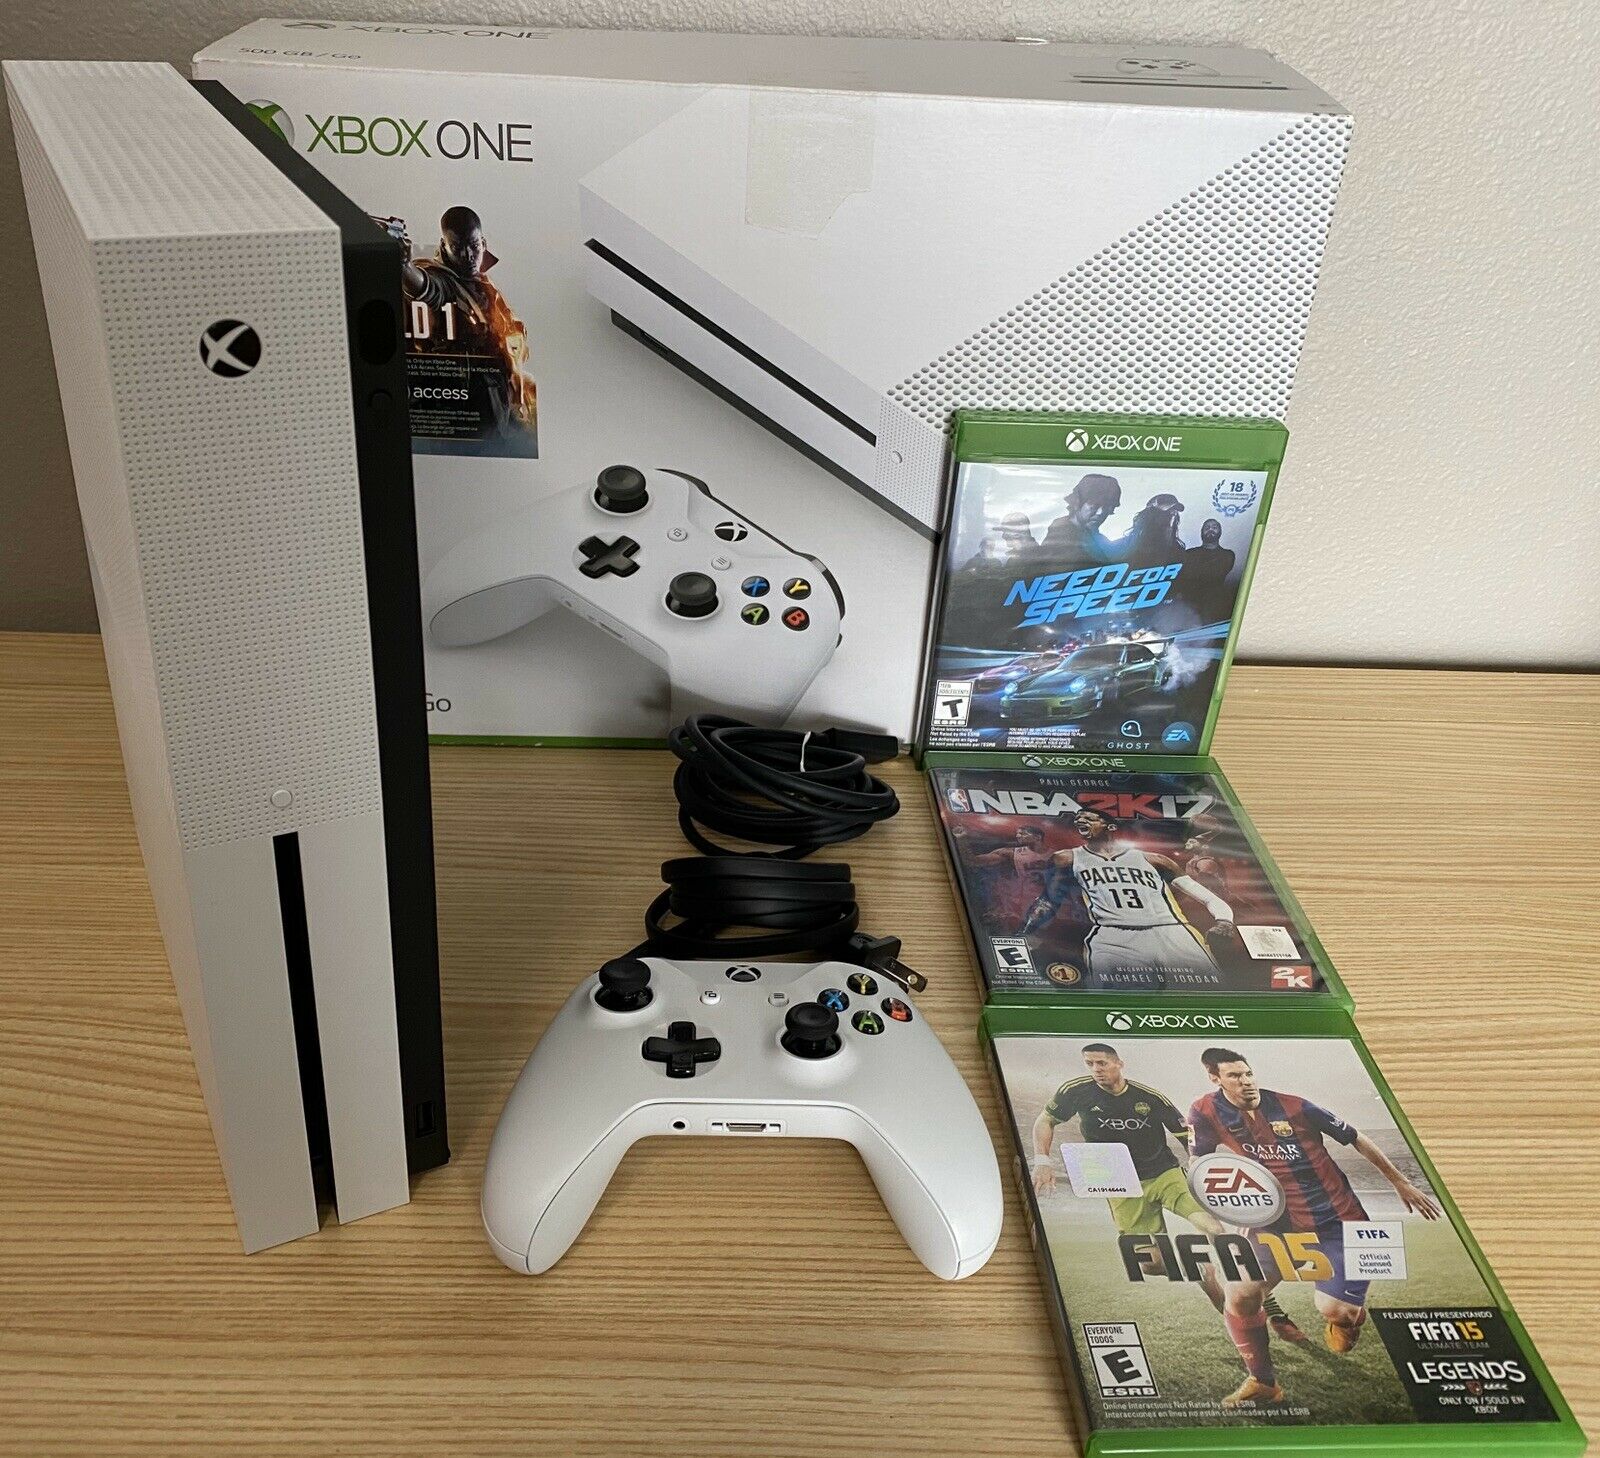 Xbox One S 500GB Bundle with 3 Games - iCommerce on Web
